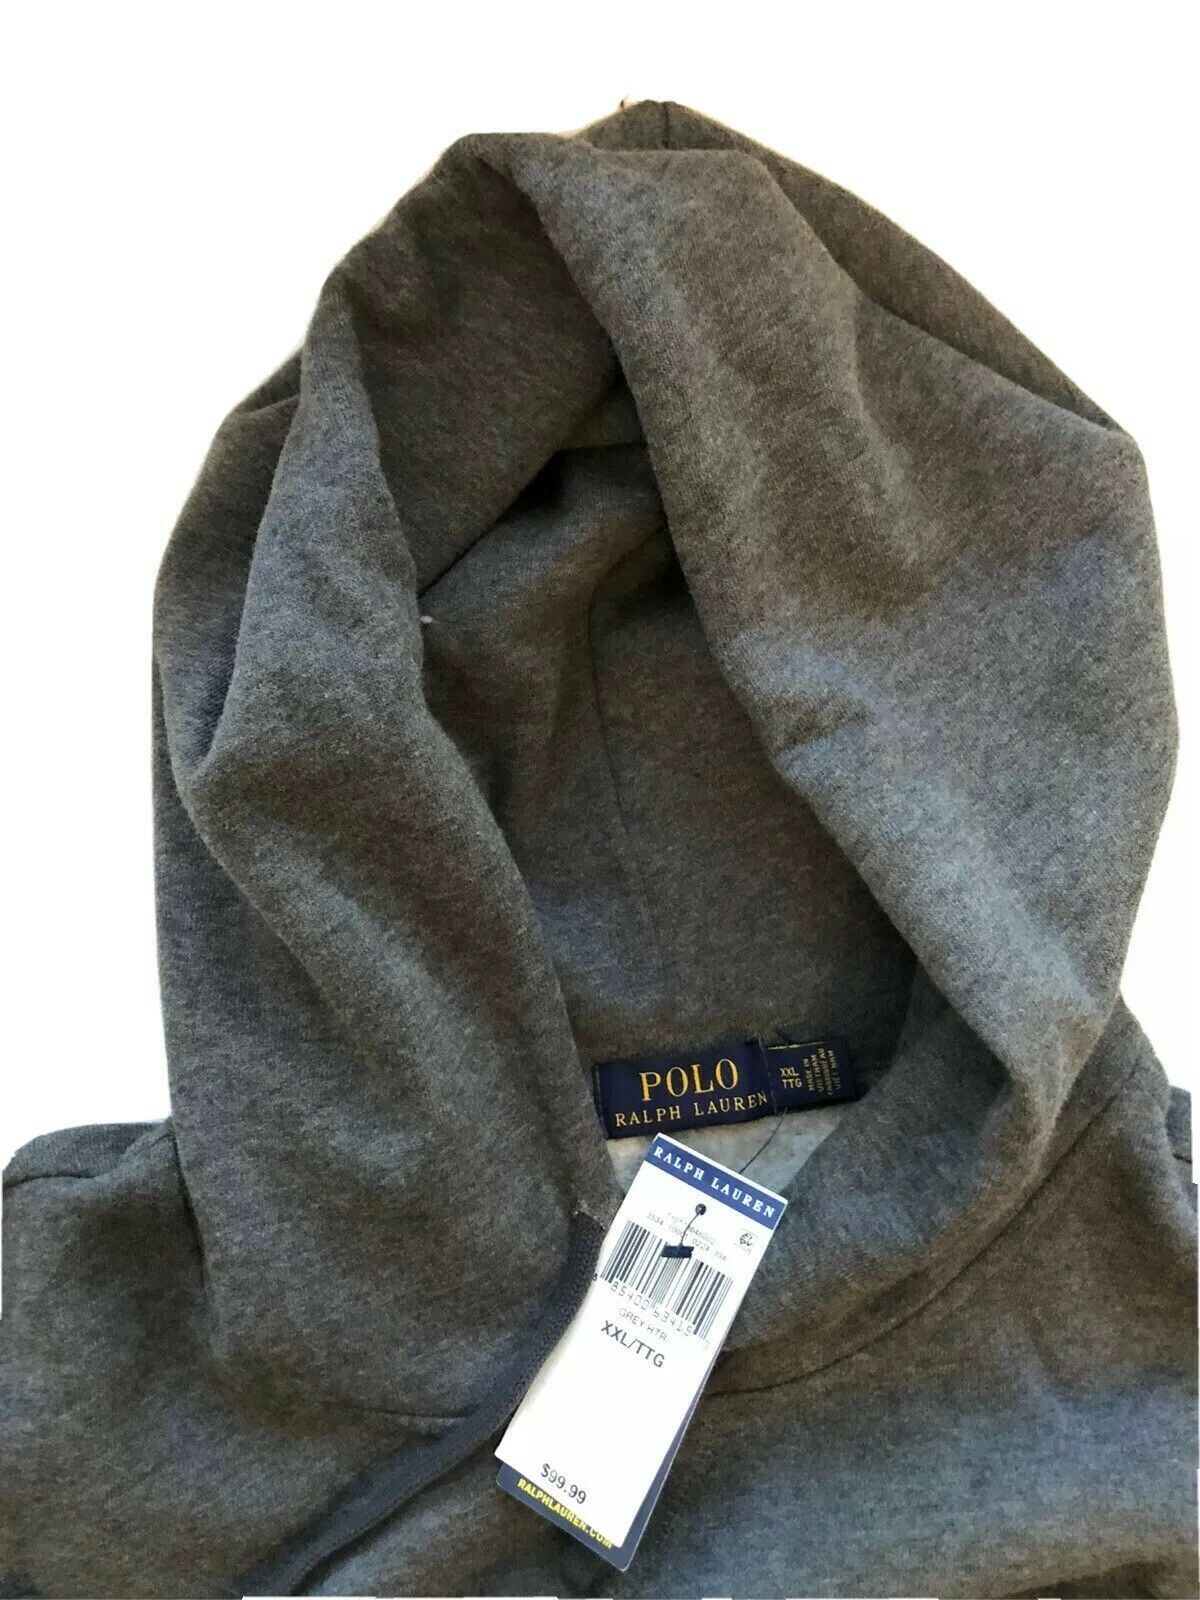 NWT $99.99 Polo Ralph Lauren Bear Gray Sweater with Hoodie 2XL